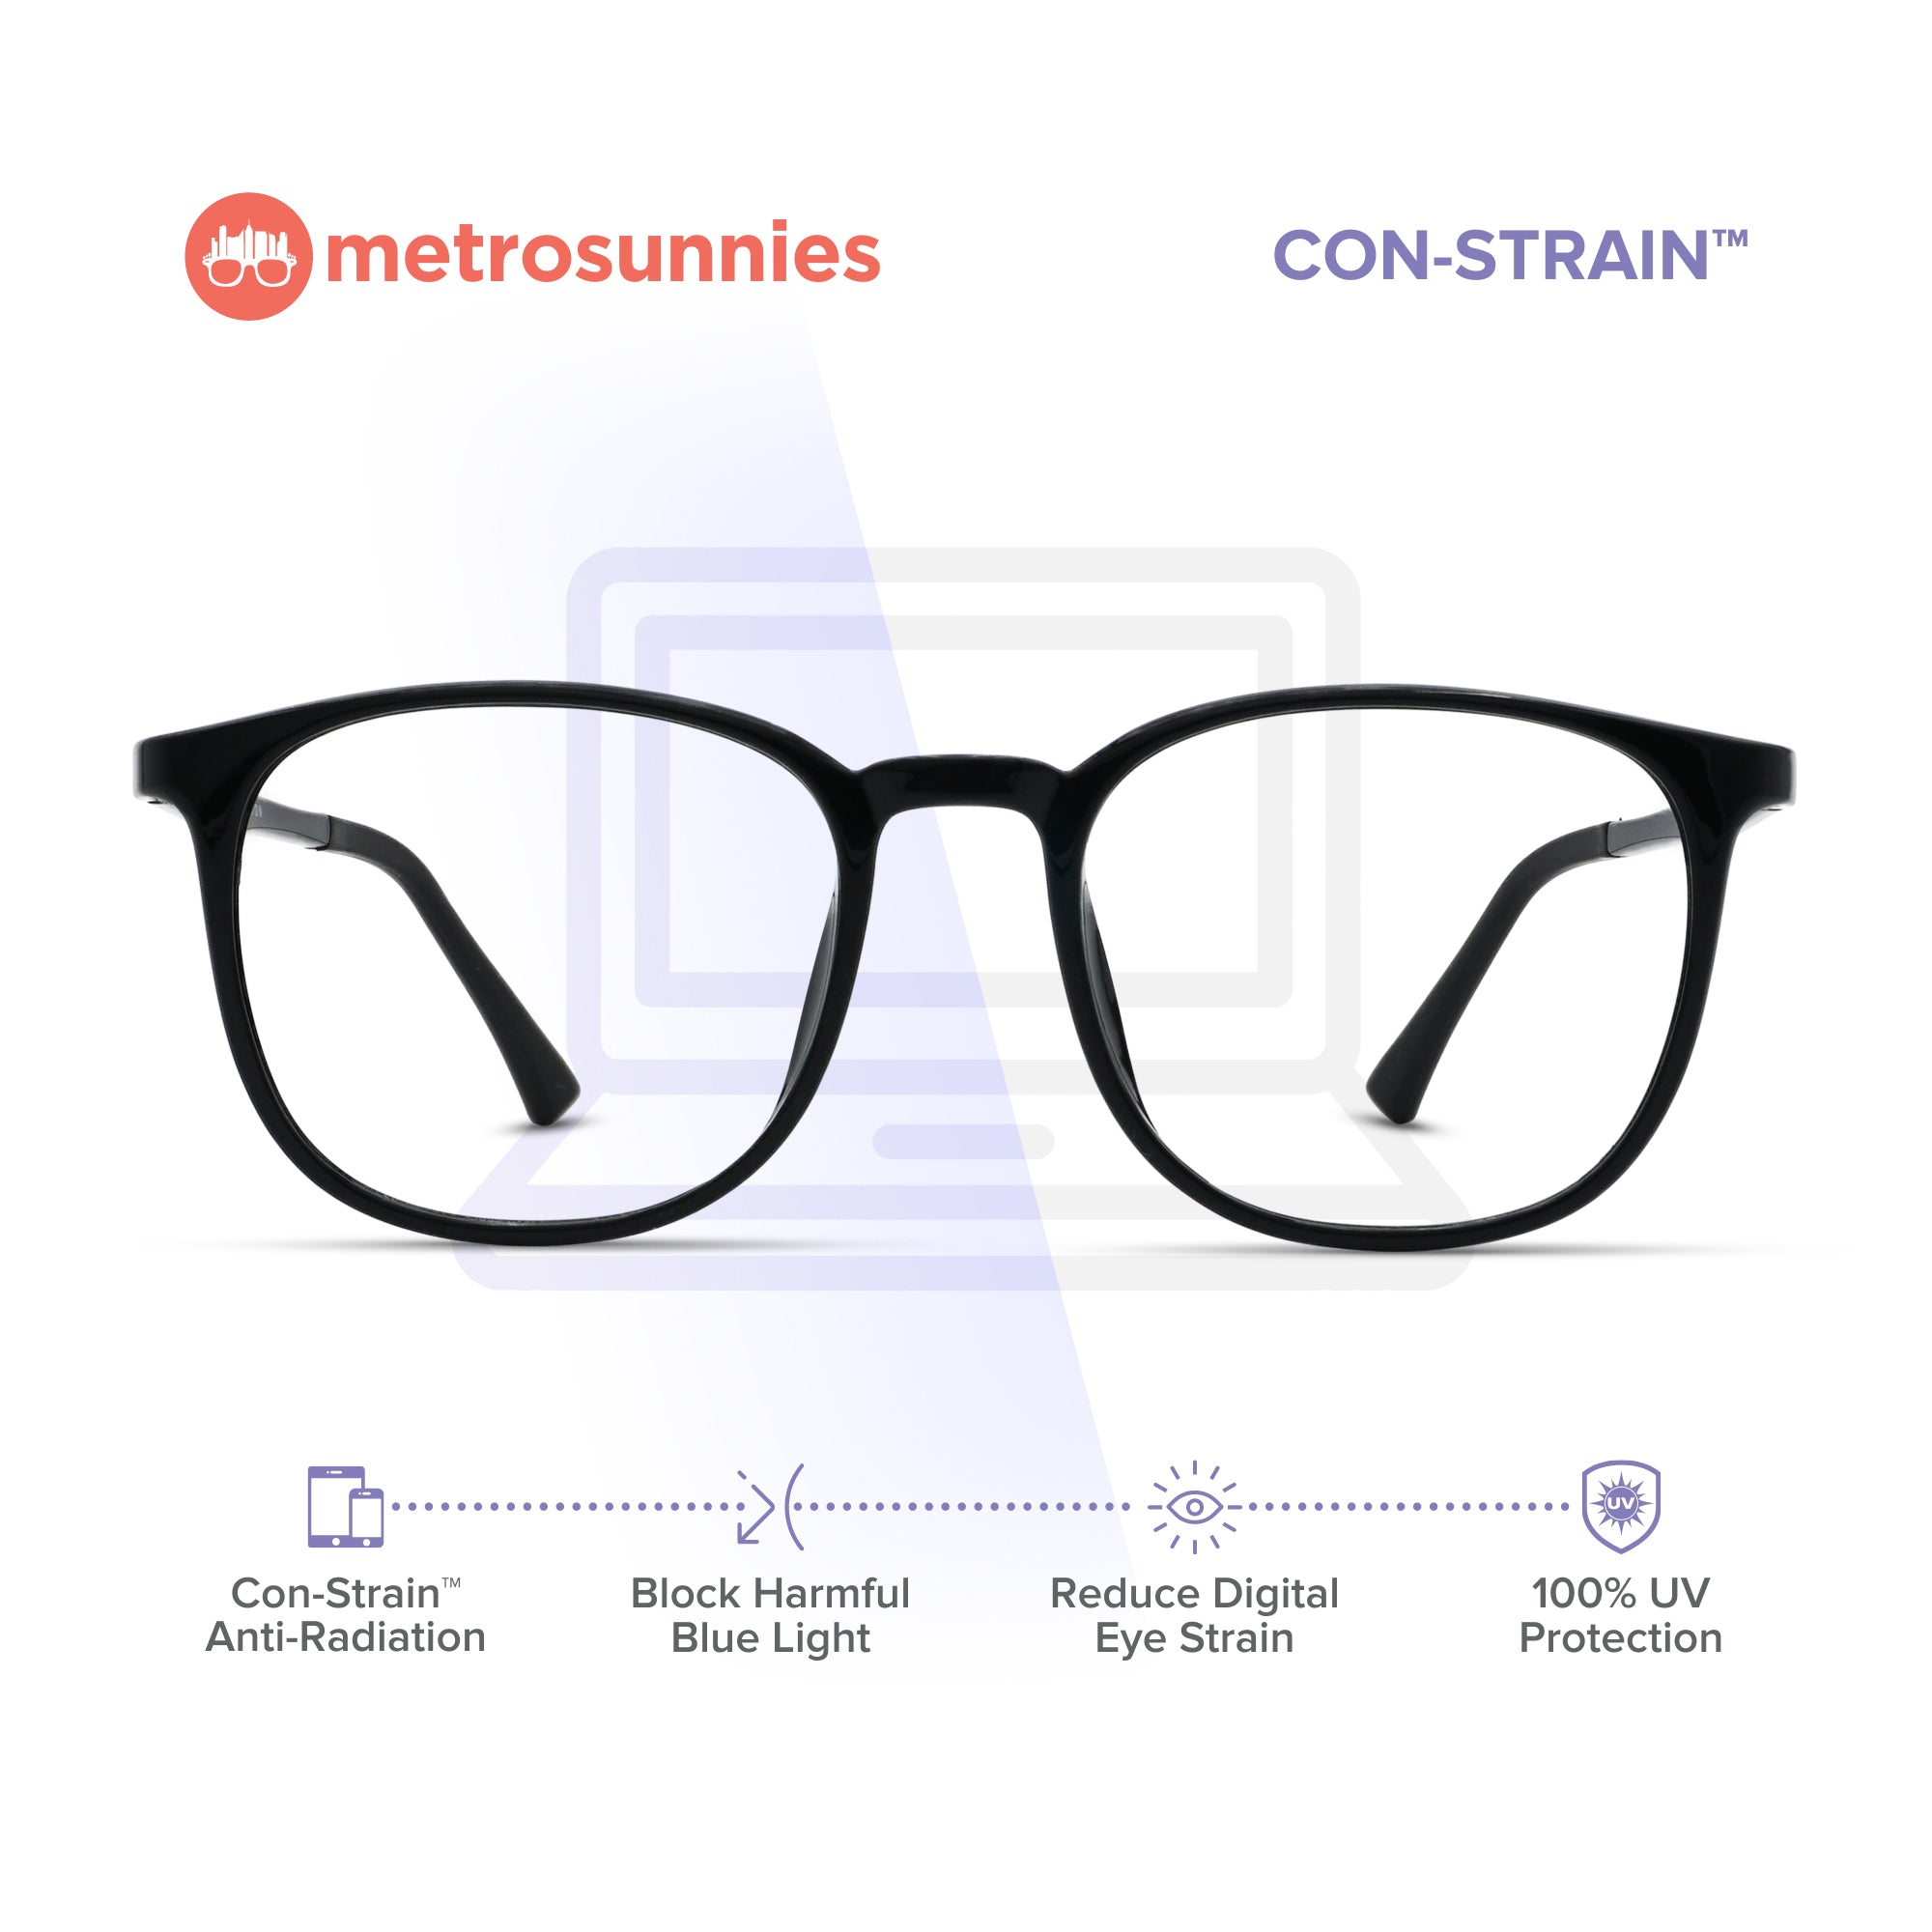 MetroSunnies Lion Specs (Black) / Con-Strain Blue Light / Versairy / Anti-Radiation Eyeglasses